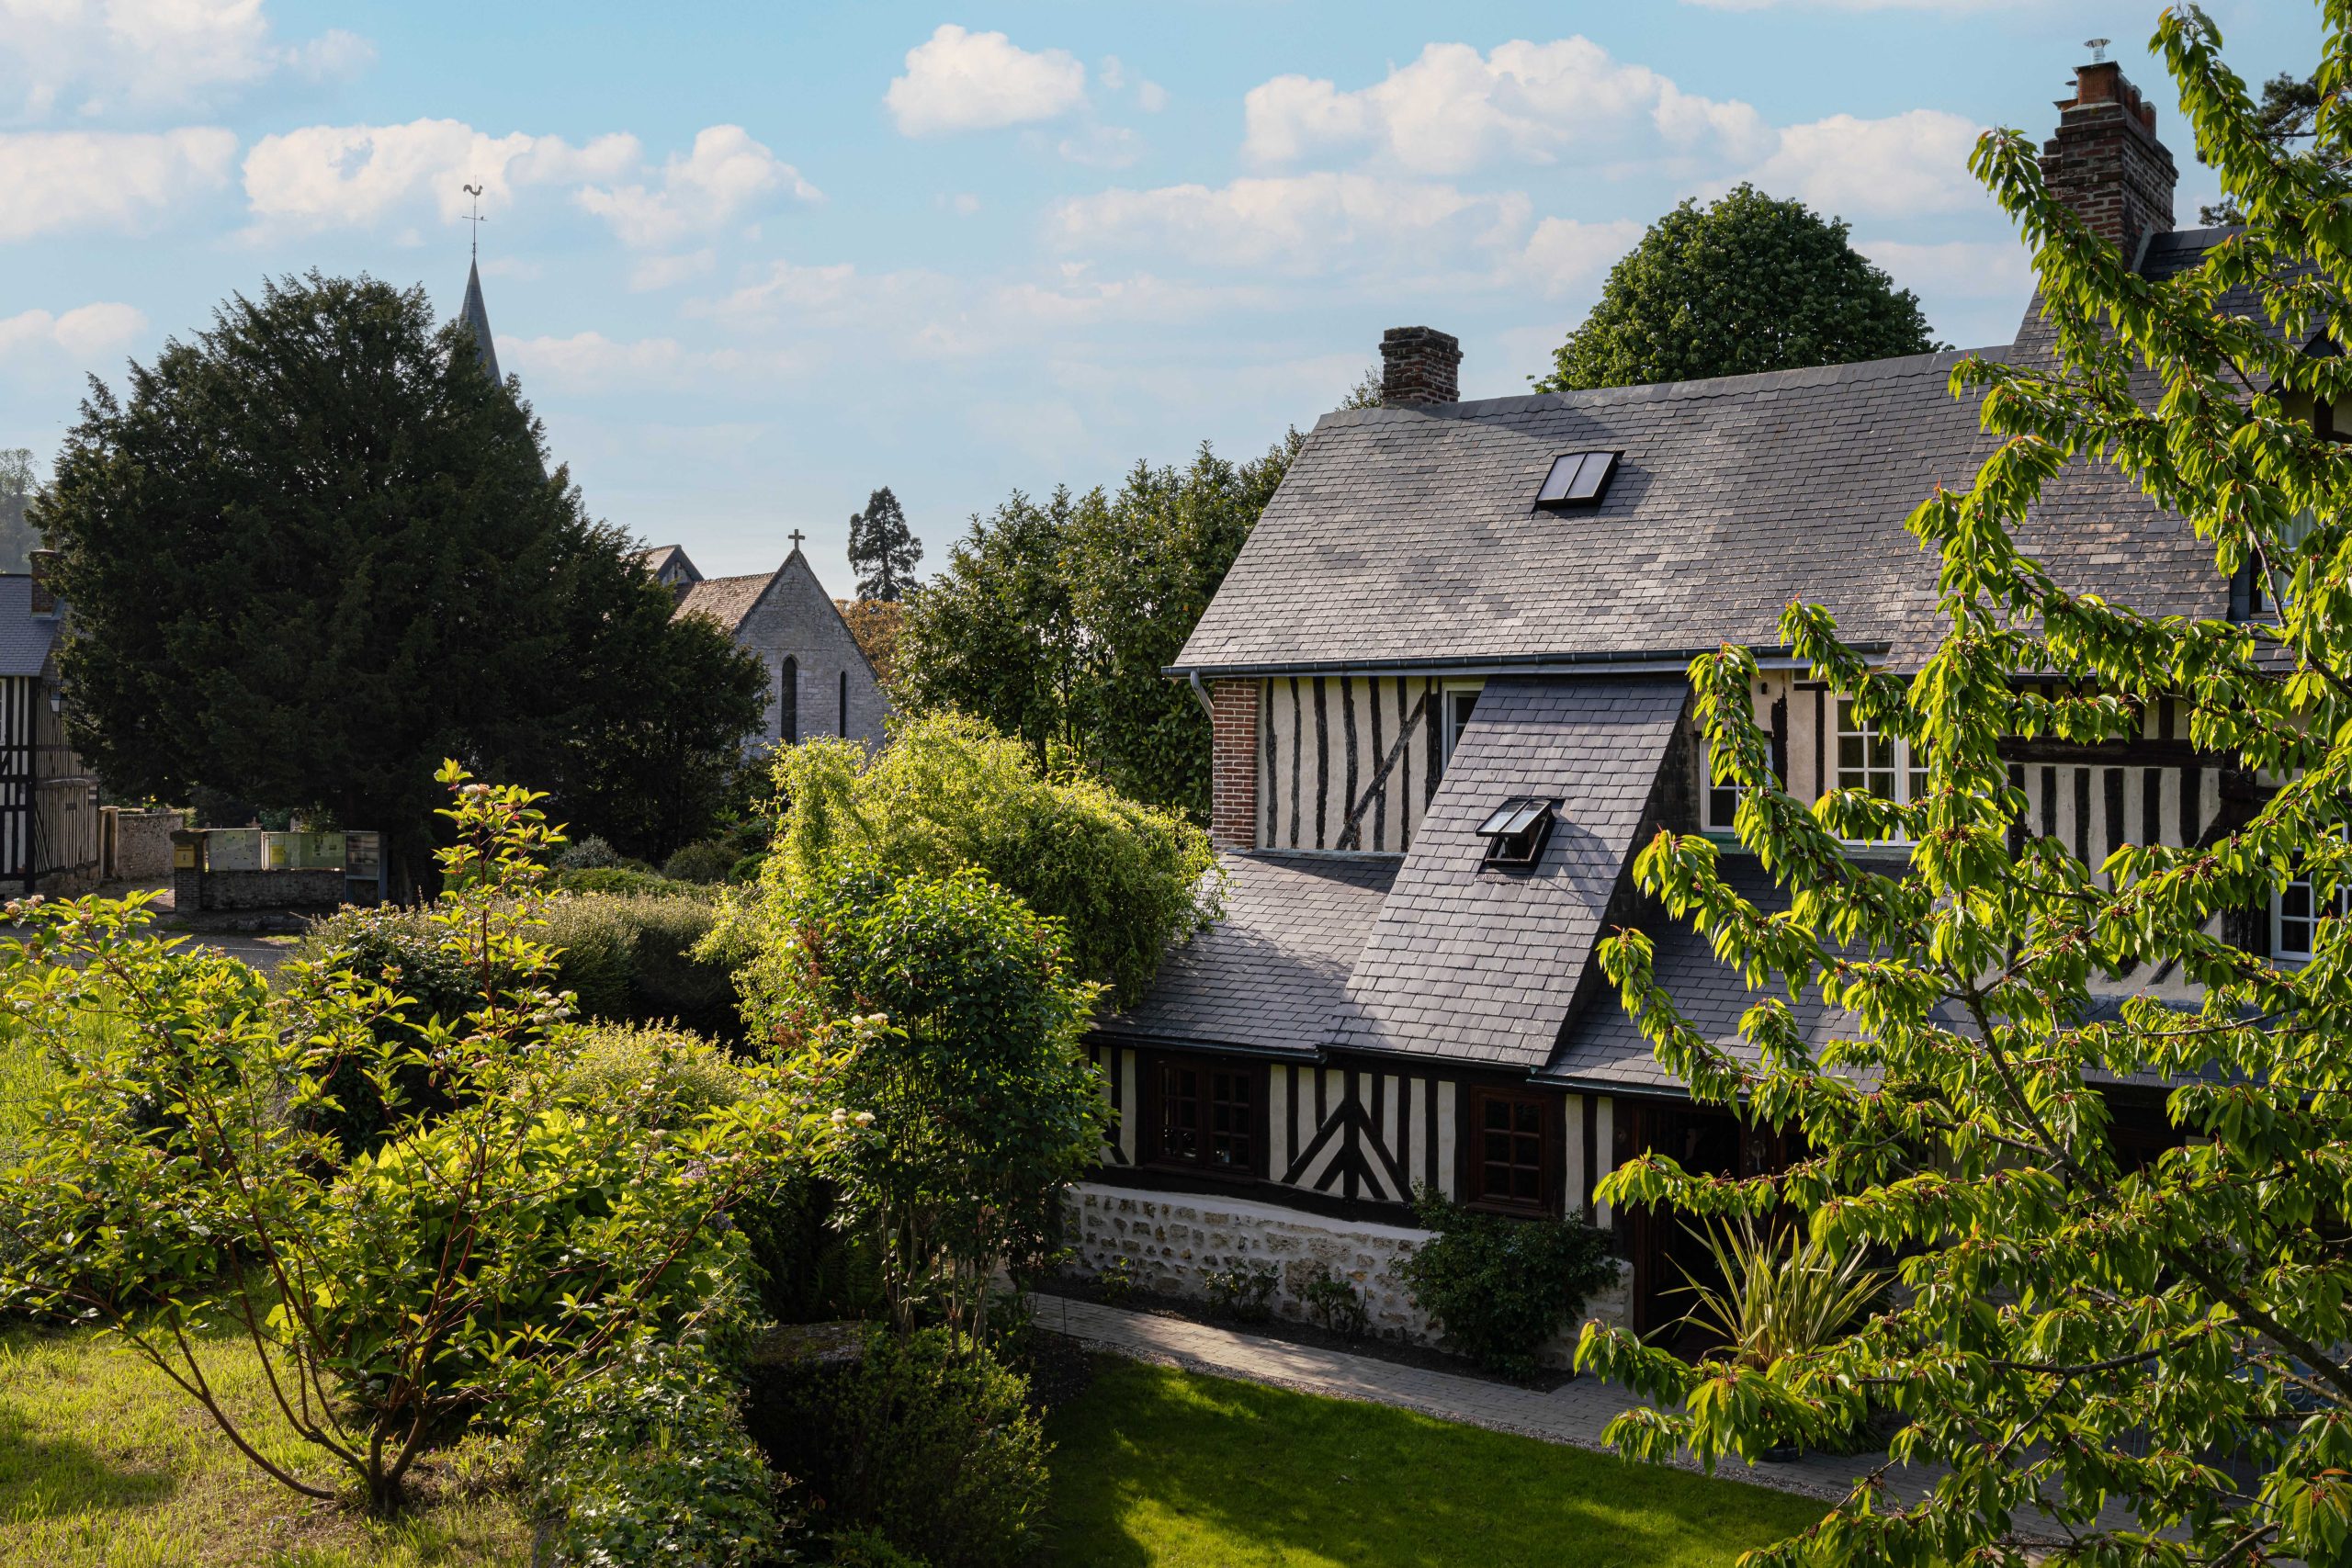 casa in pietra con tetto in ardesia, immersa nel verde - cottage honfleur